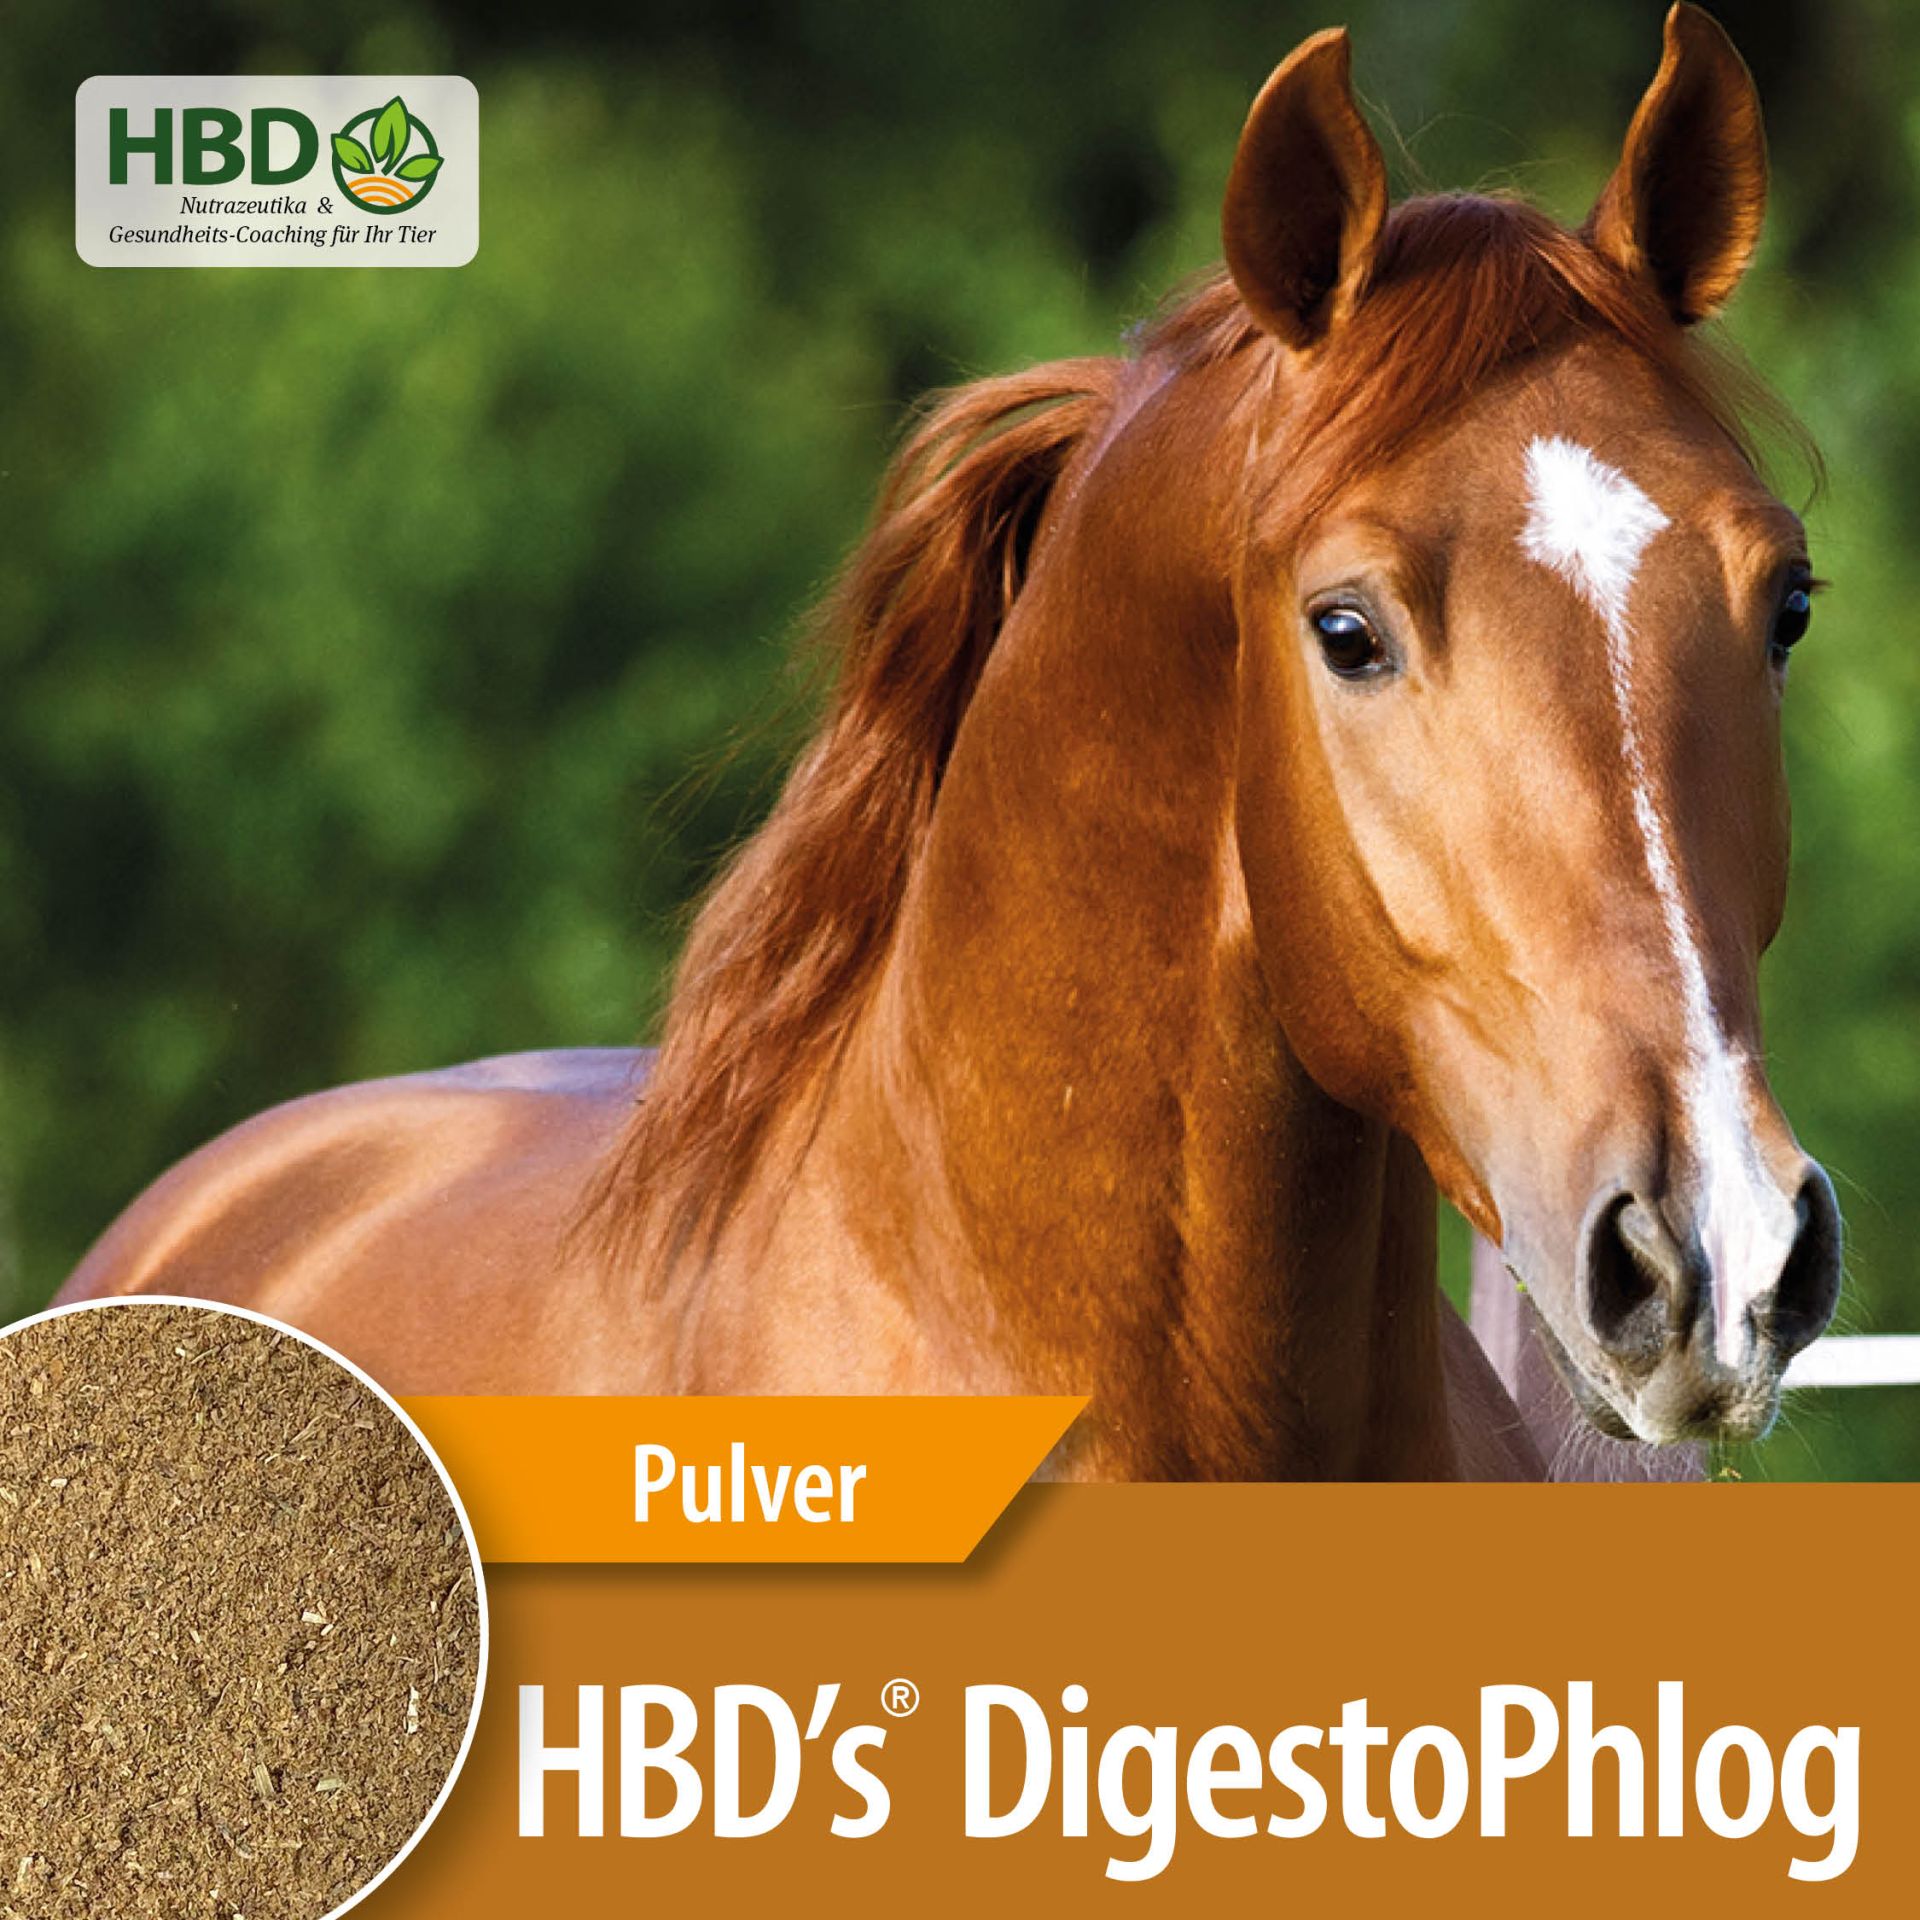 HBD-Agrar - Allergie & Darm-Fit Paket #2 - HBD's® DigestoVit® ohne Bierhefe + HBD's® DigestoPhlog